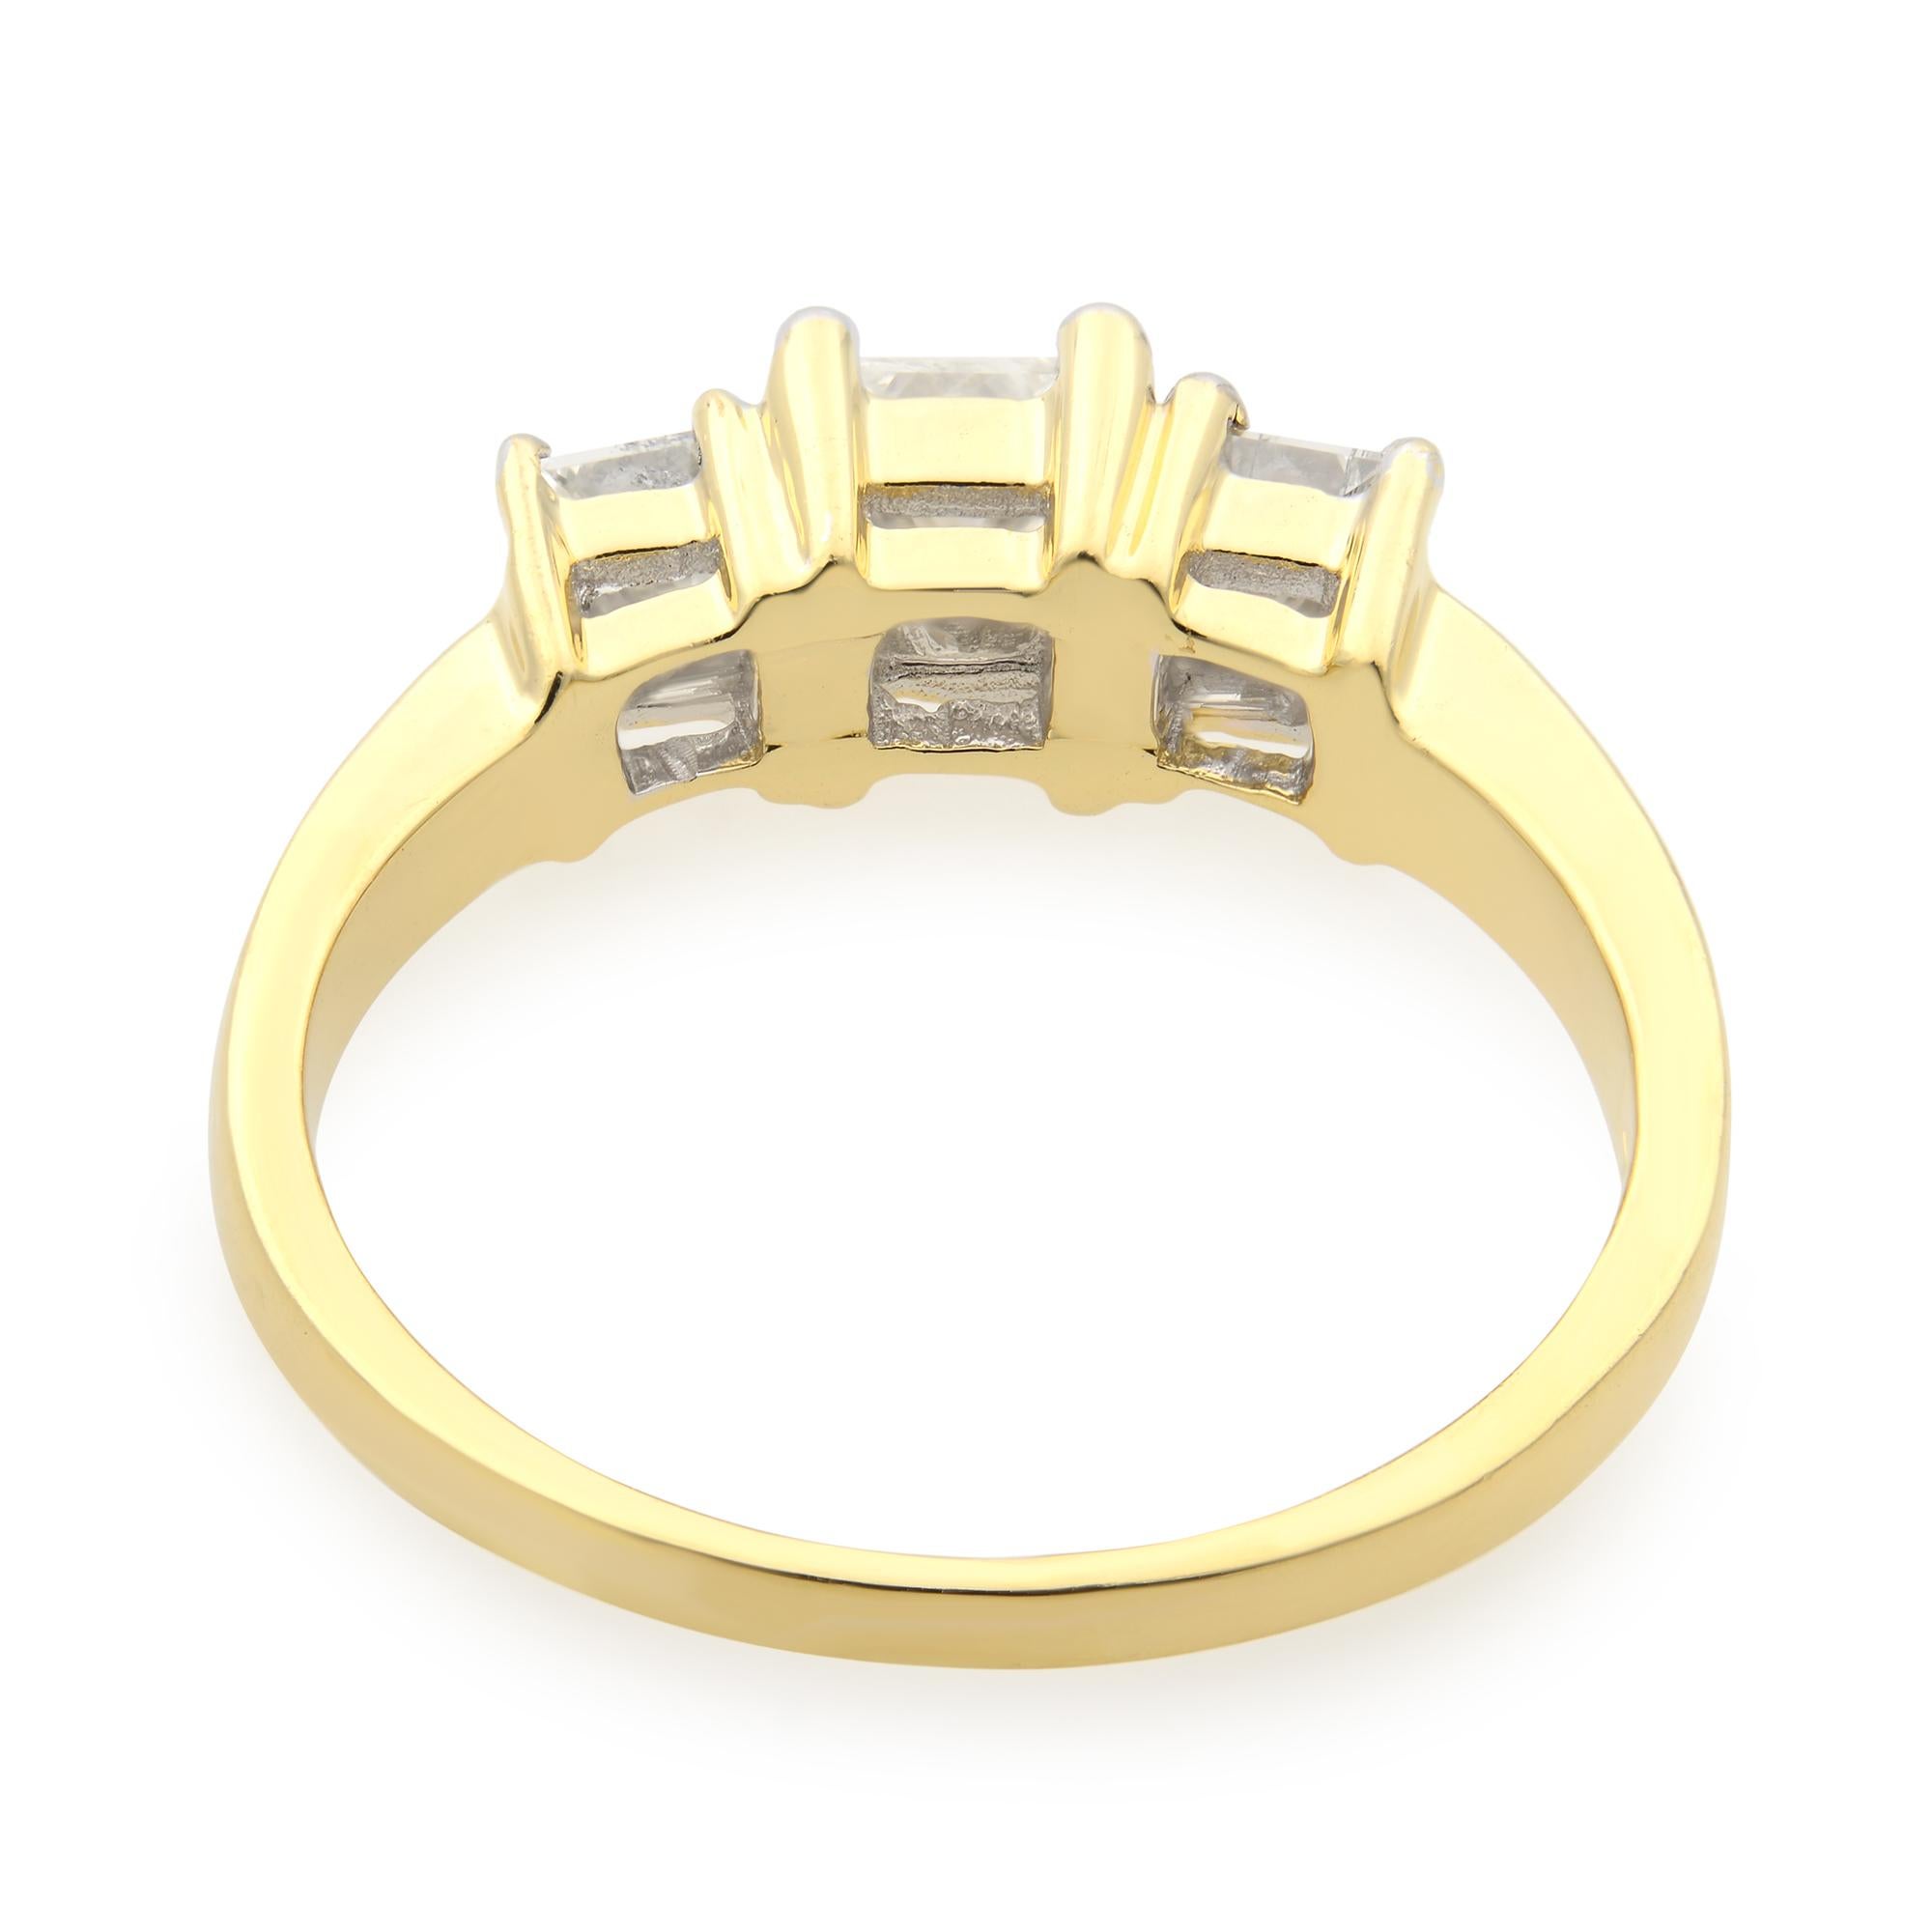 Modern Rachel Koen 14K Yellow Gold Princess Cut Three Stone Engagement Ring 1.00cttw For Sale